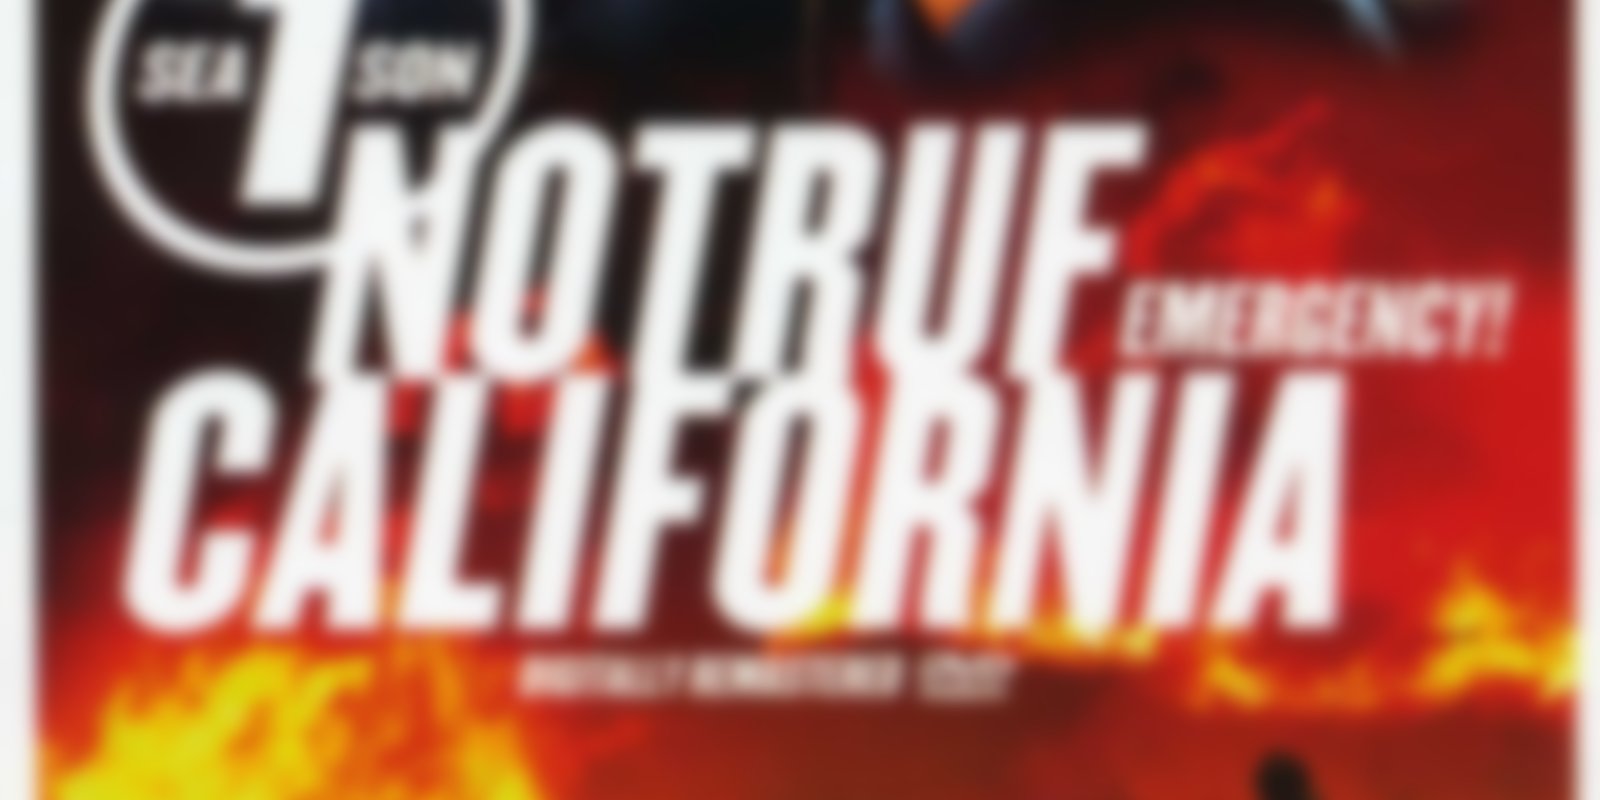 Notruf California - Staffel 1